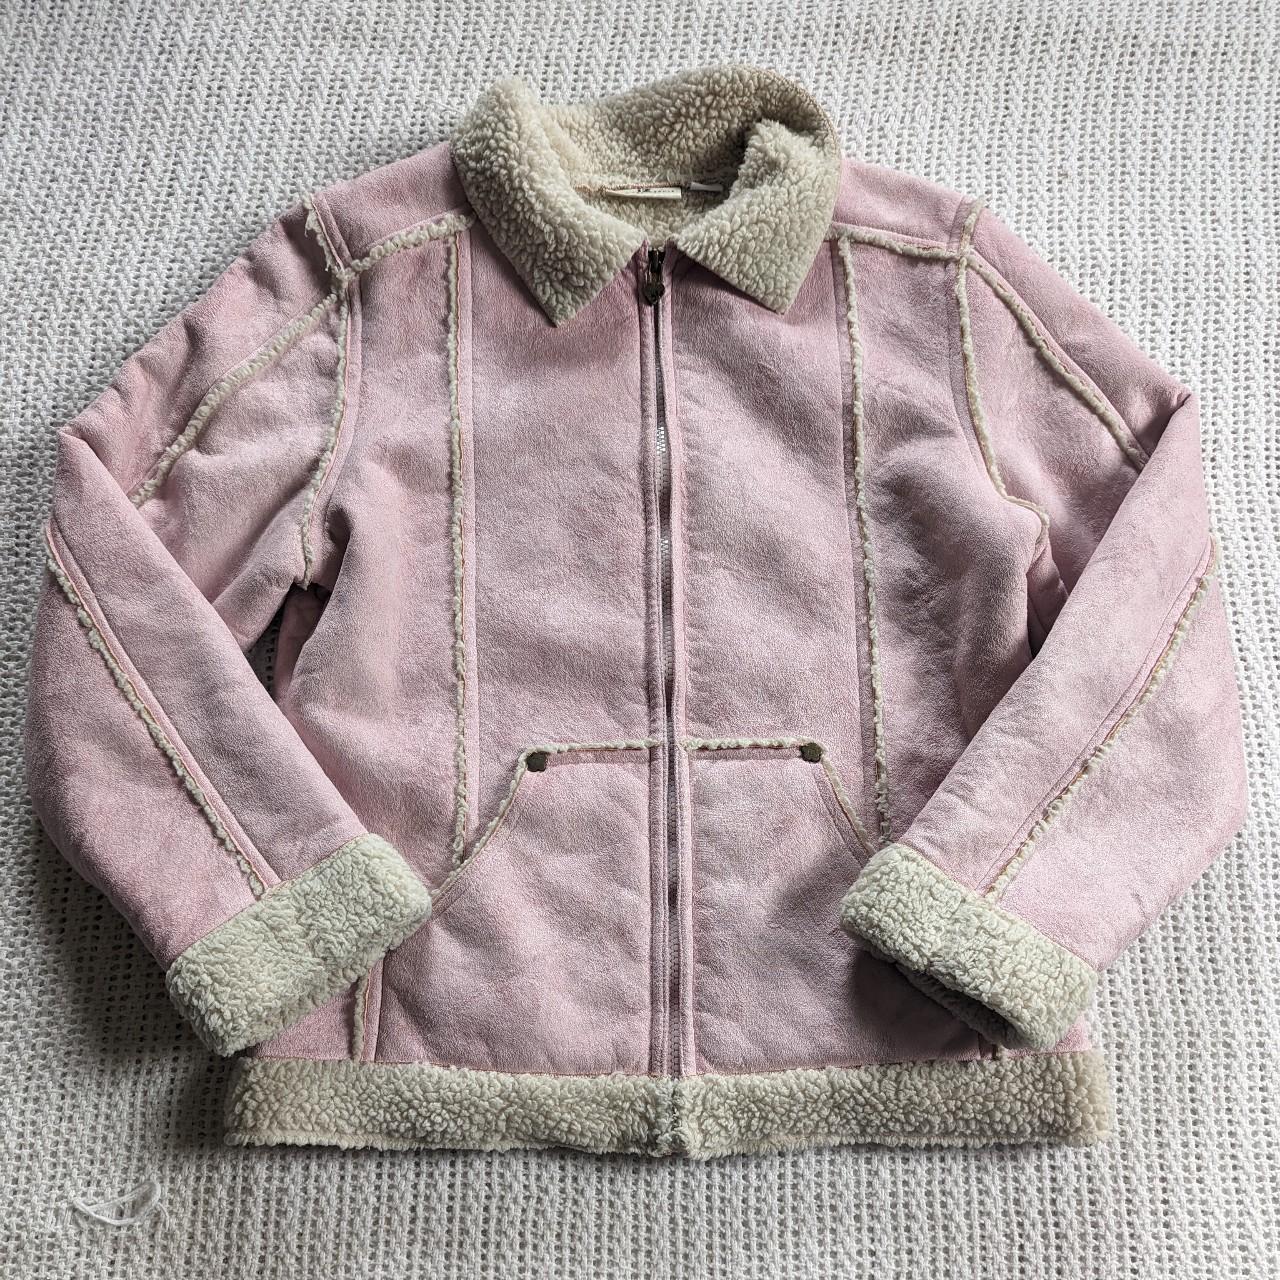 IZ BYER Women's Large Coat Jacket Pastel Pink Faux... - Depop